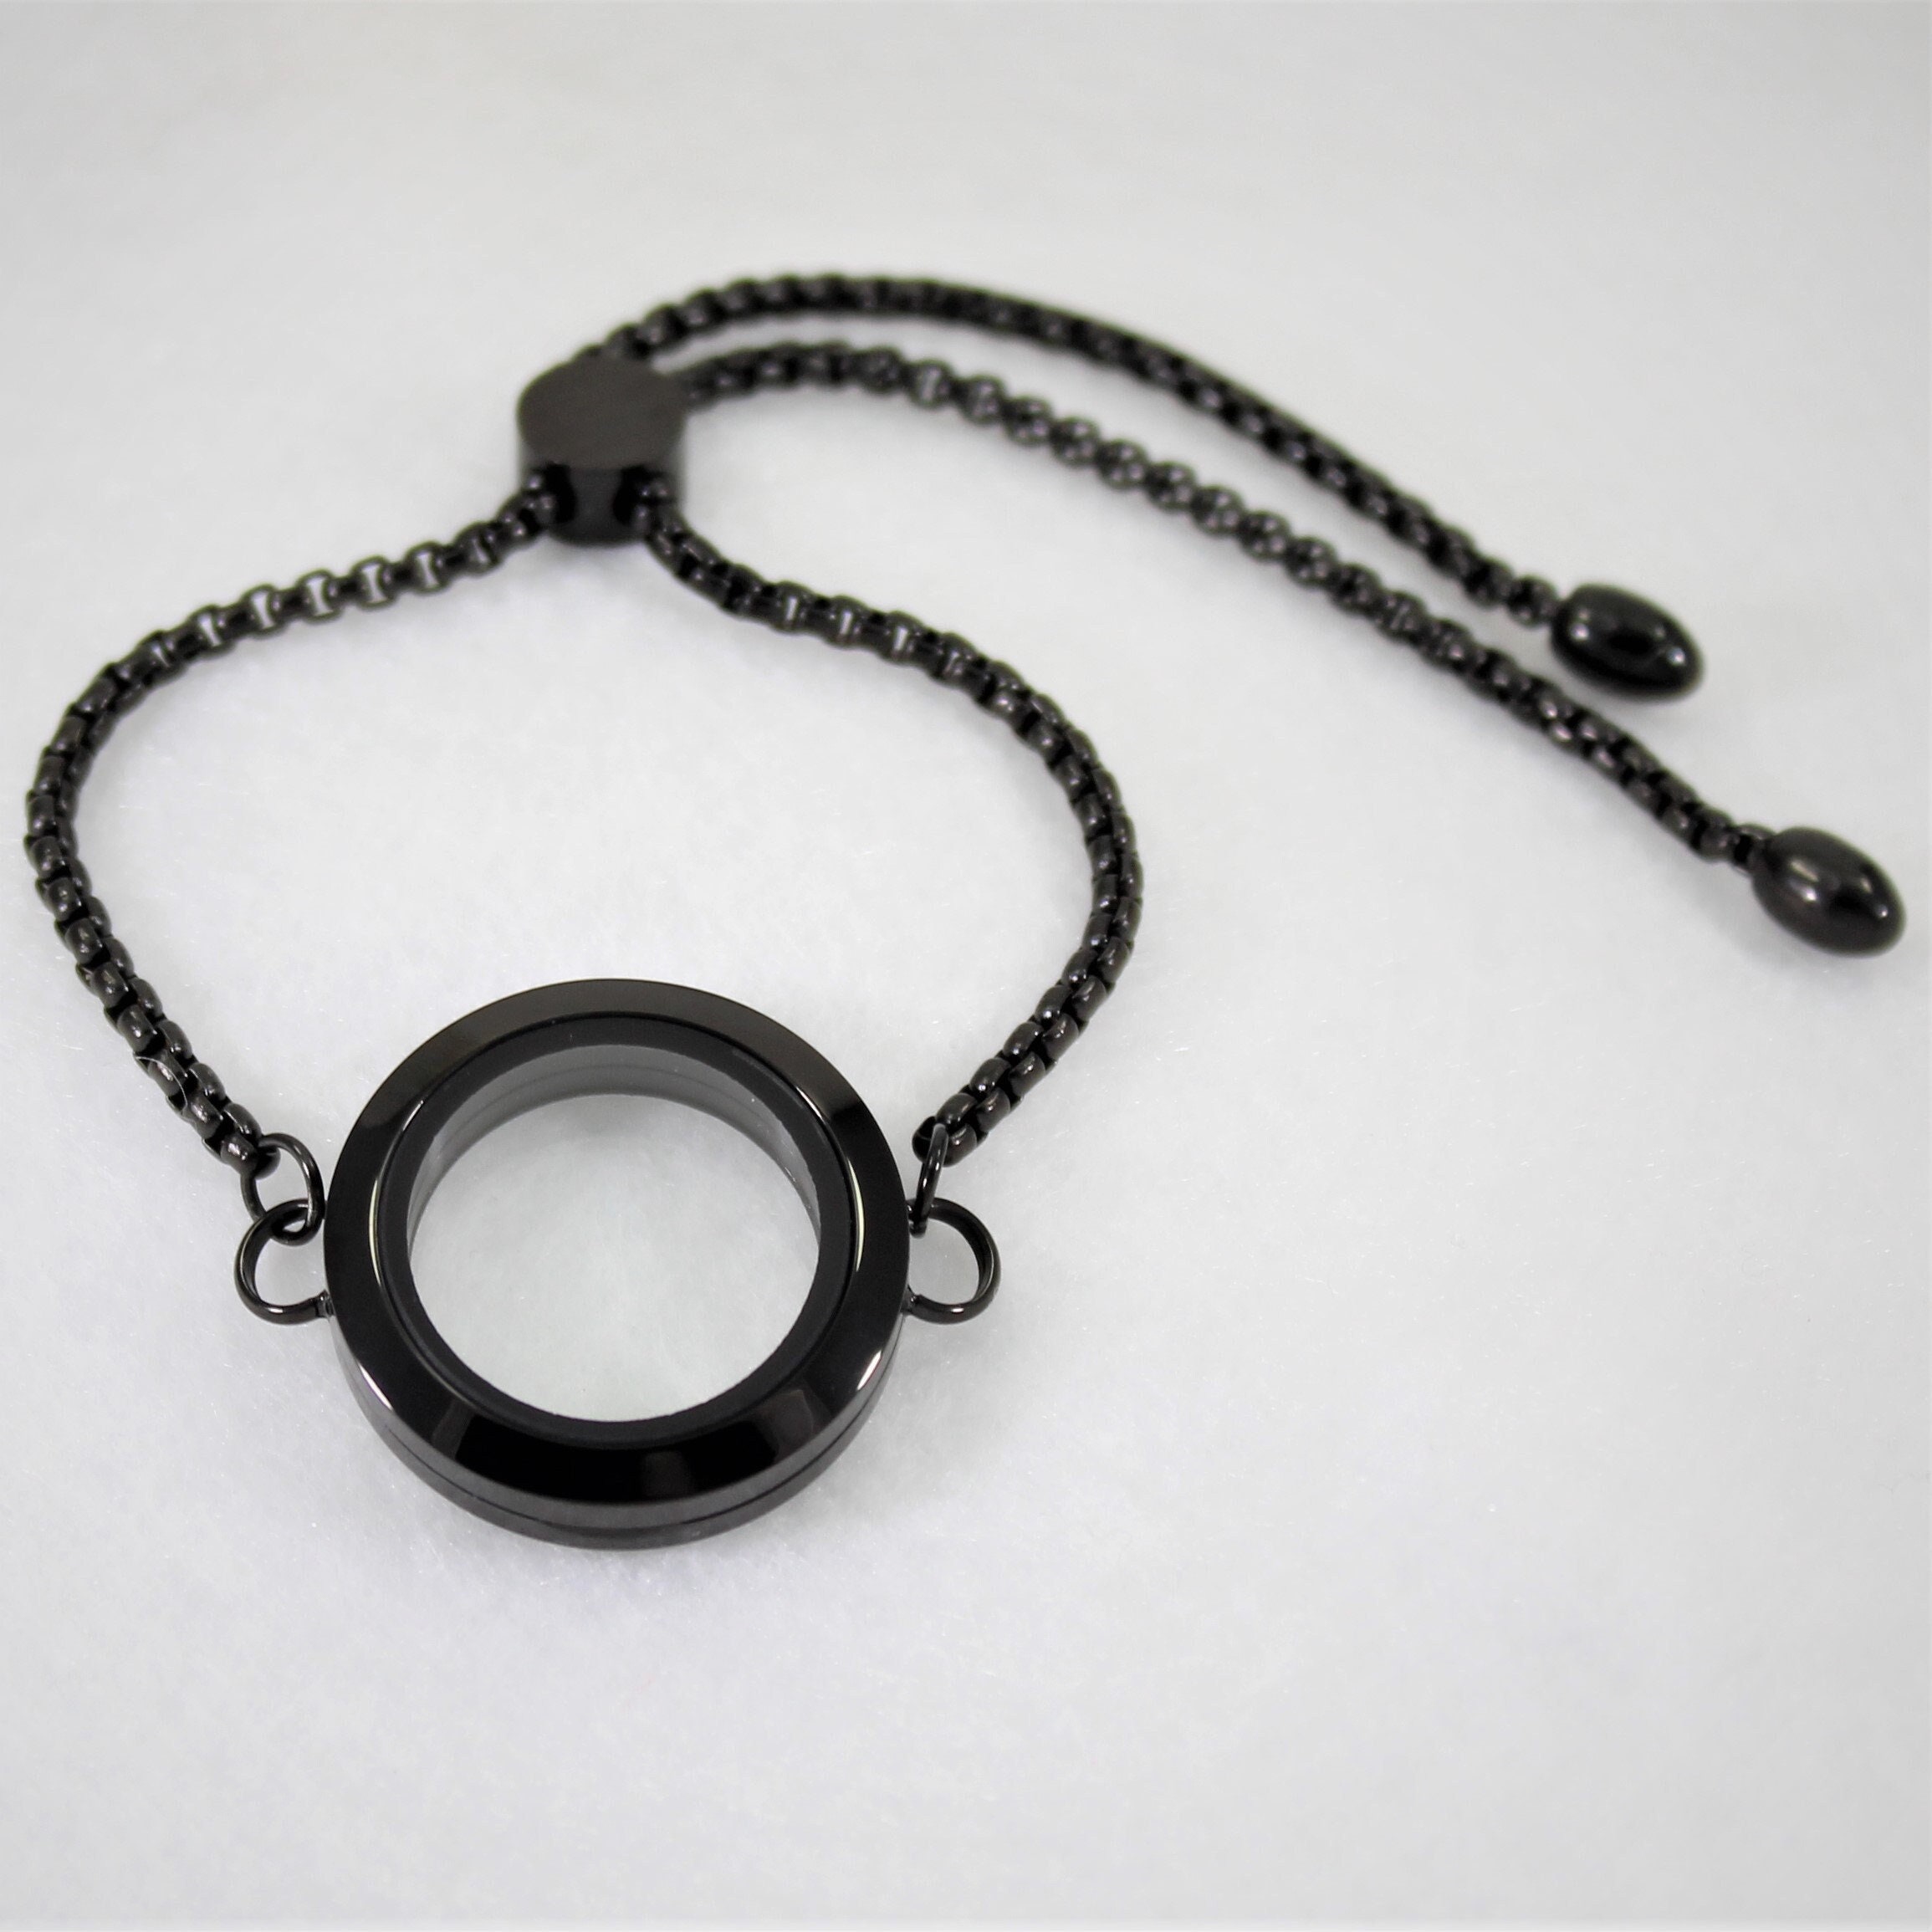 25mm Adjustable Floating Locket Bracelet / Glass Locket / Memory Locket Stainless Steel Black